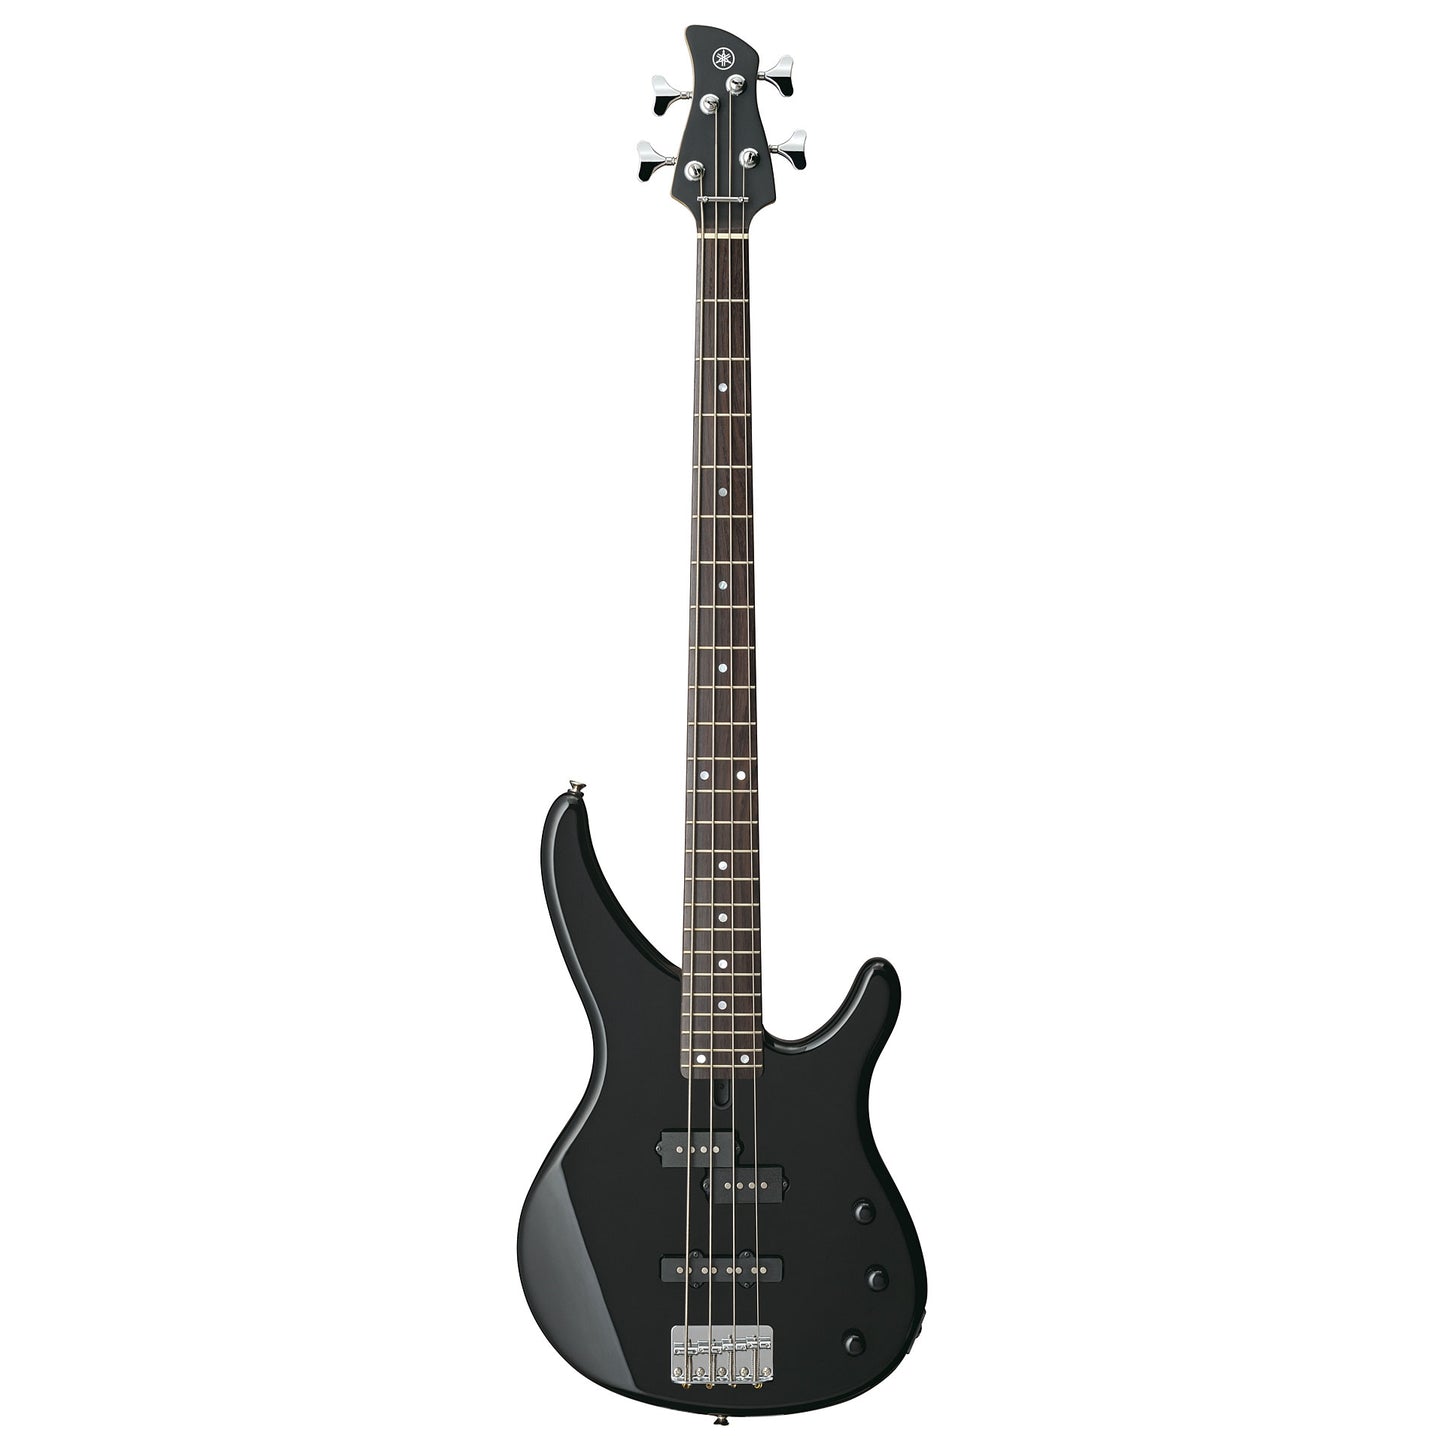 Yamaha TRBX174 Bk 4 String Electric Bass Guitar Black | Reco Music Malaysia